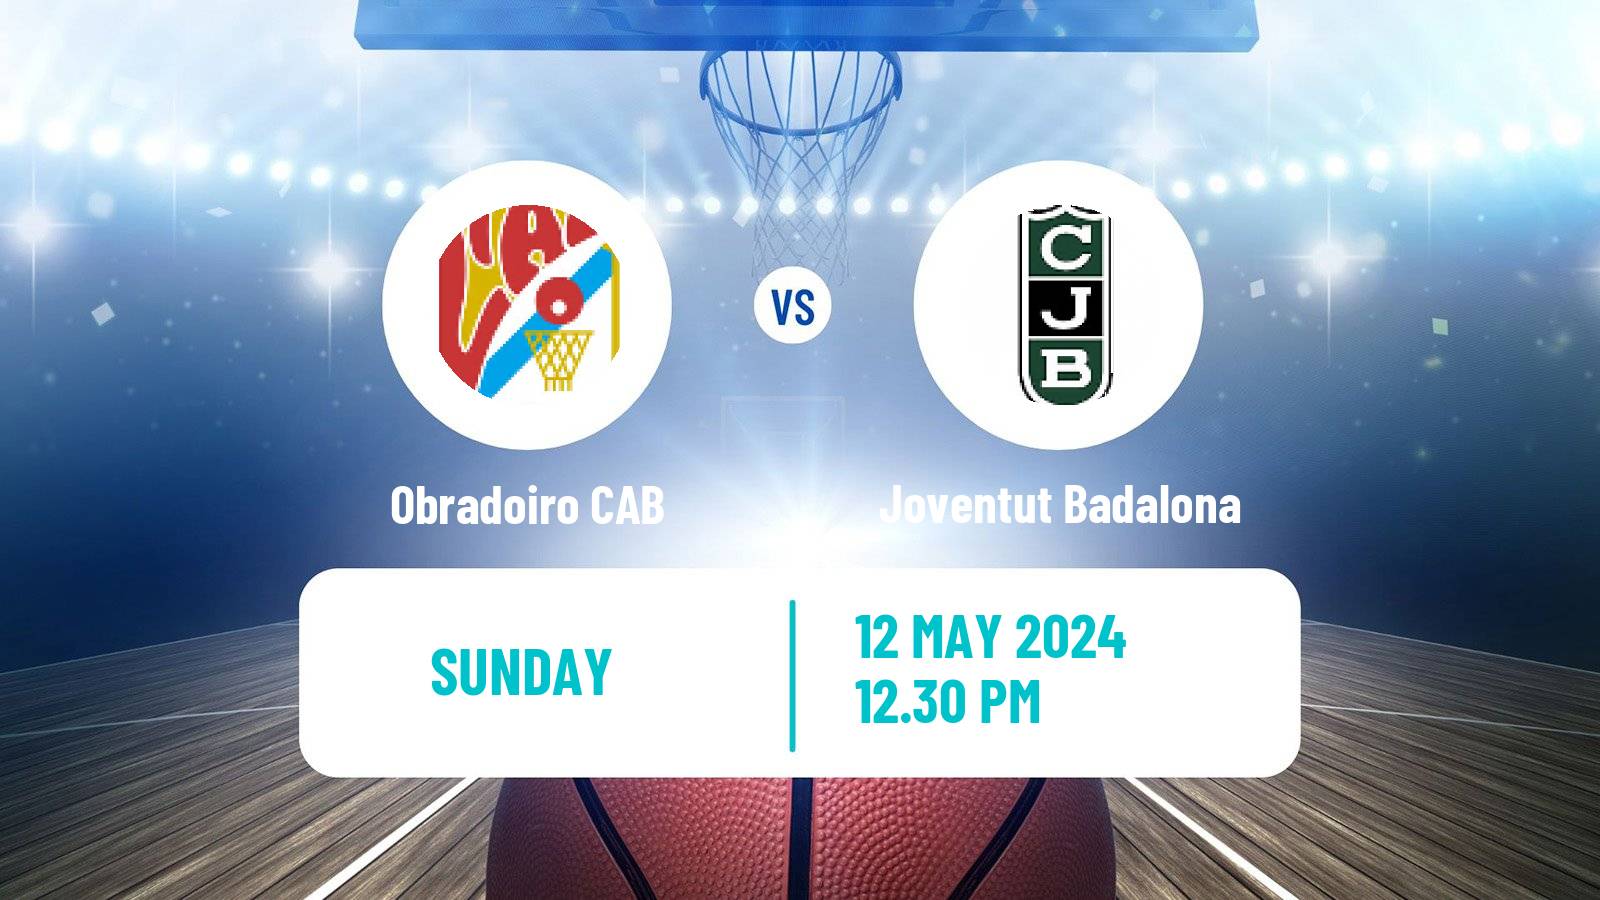 Basketball Spanish ACB League Obradoiro CAB - Joventut Badalona